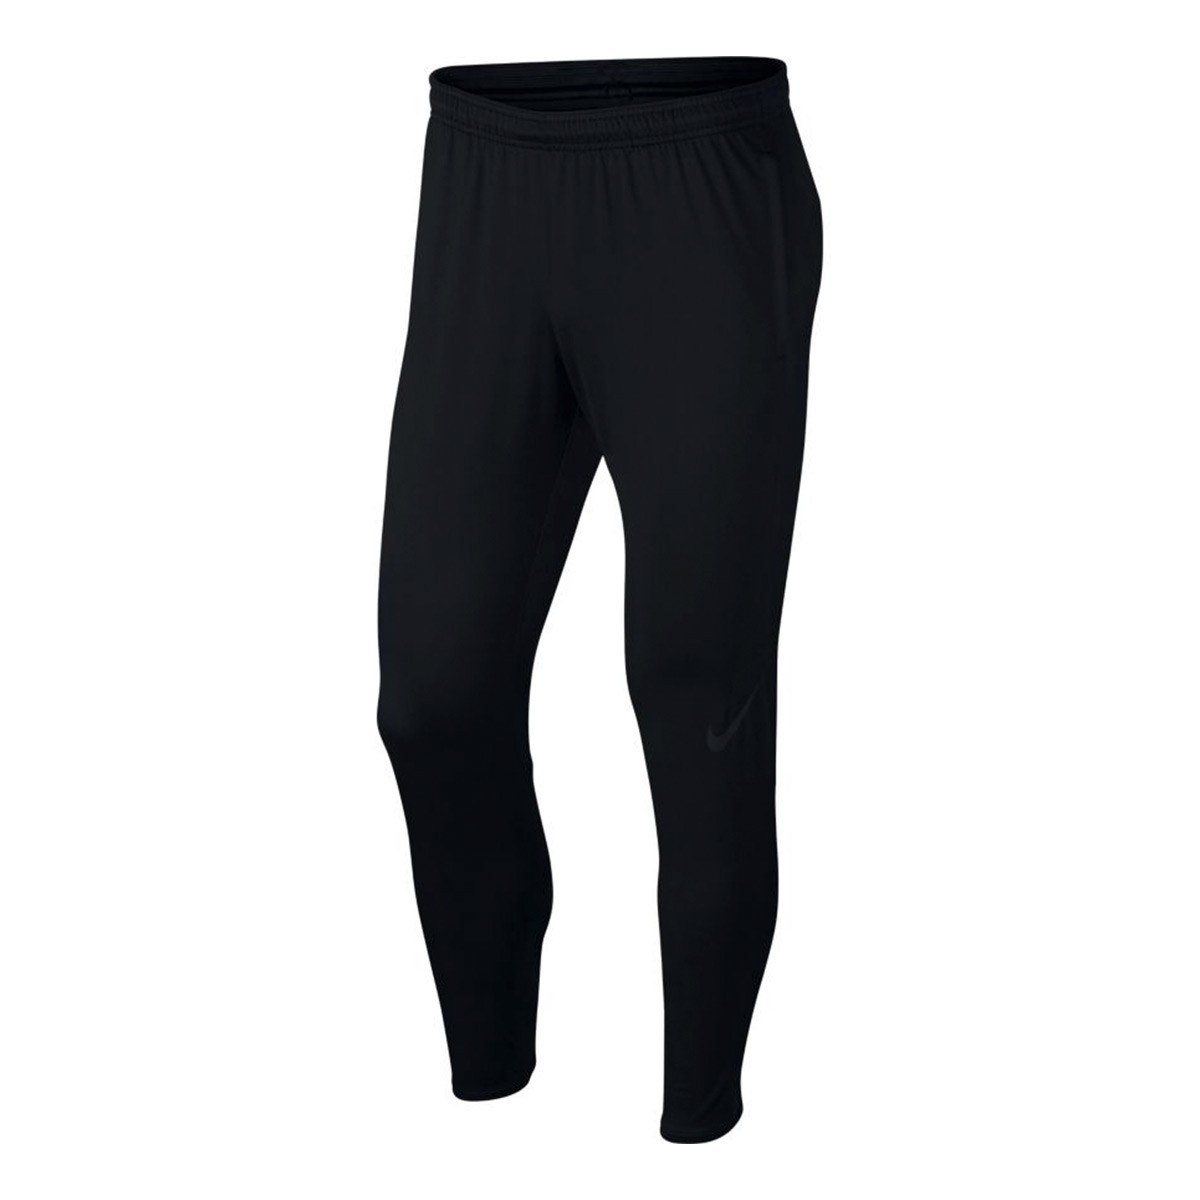 Pantalón largo Nike Dry Squad Black - Tienda de fútbol Fútbol Emotion